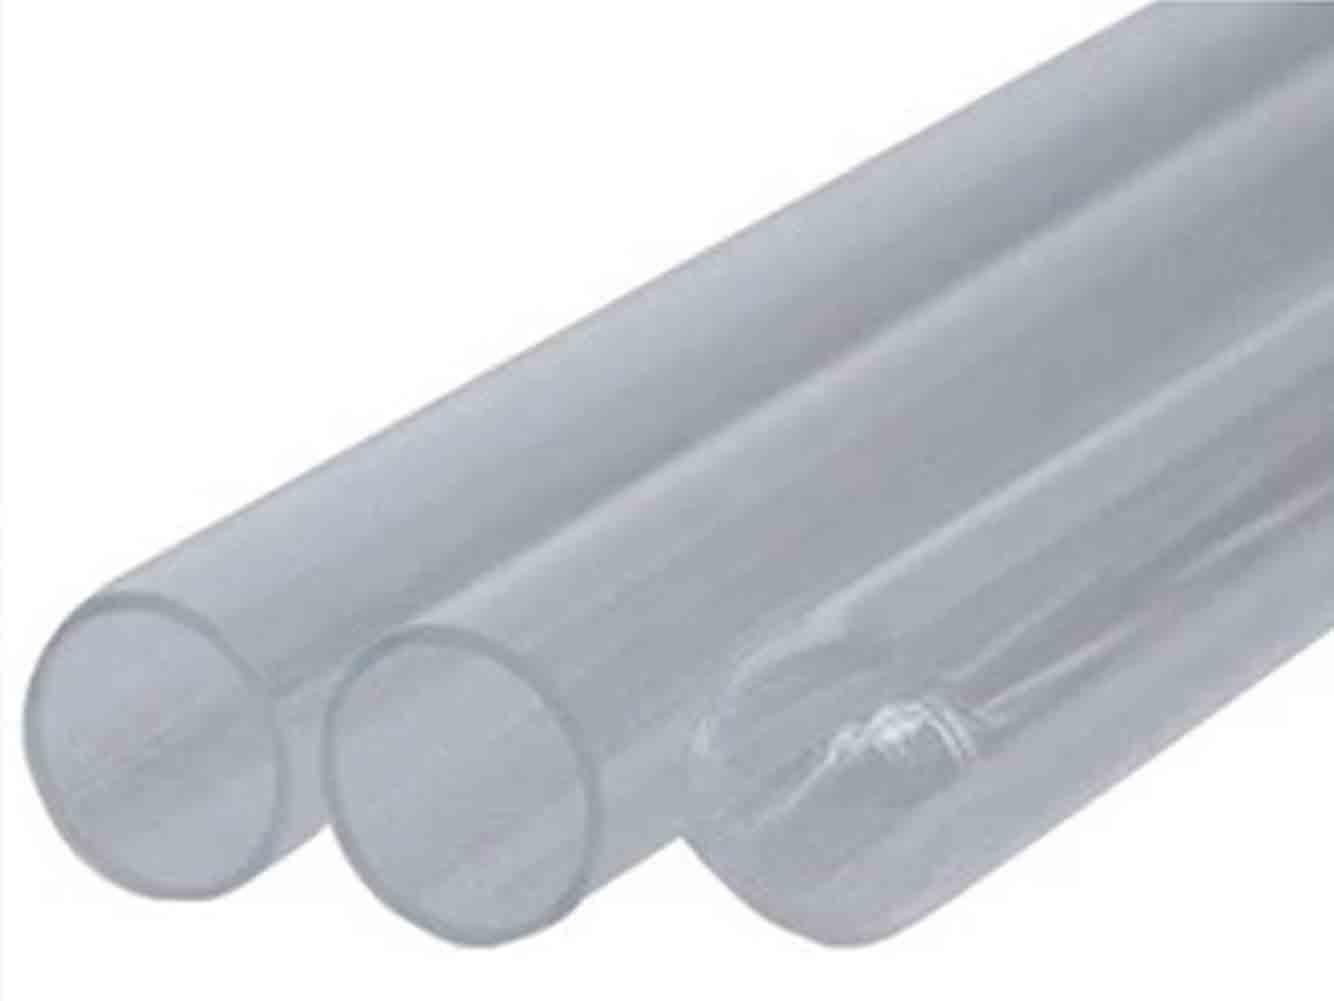 Ocpuritech sterilizer uv sanitizer design for industry